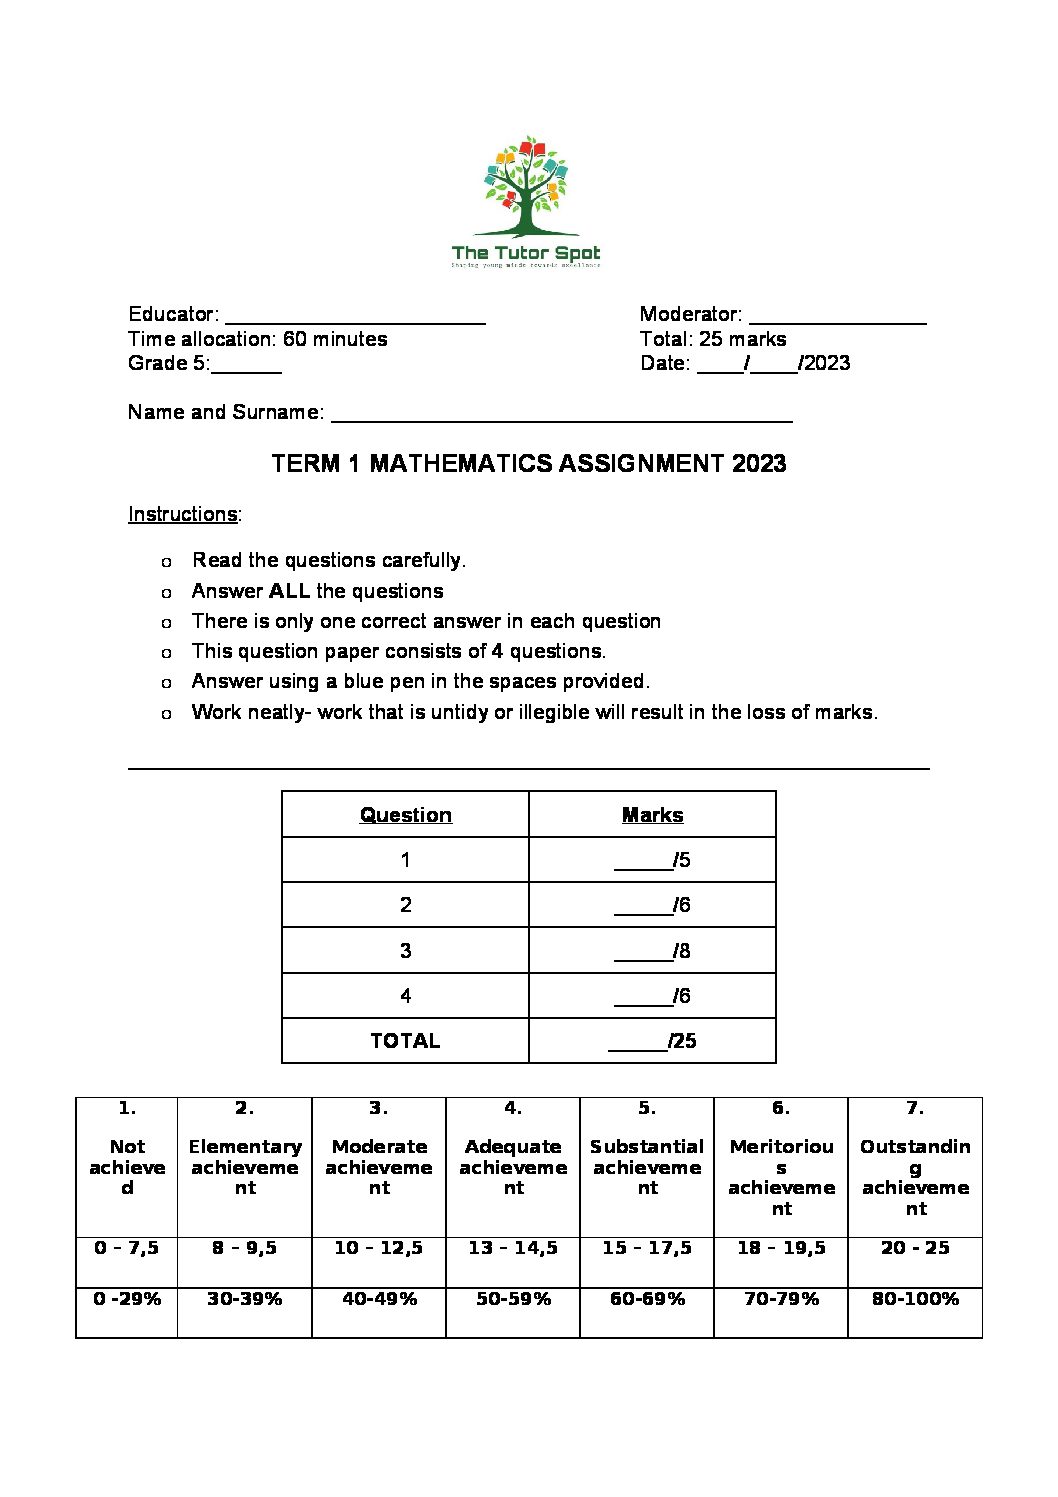 grade 6 assignment term 1 2023